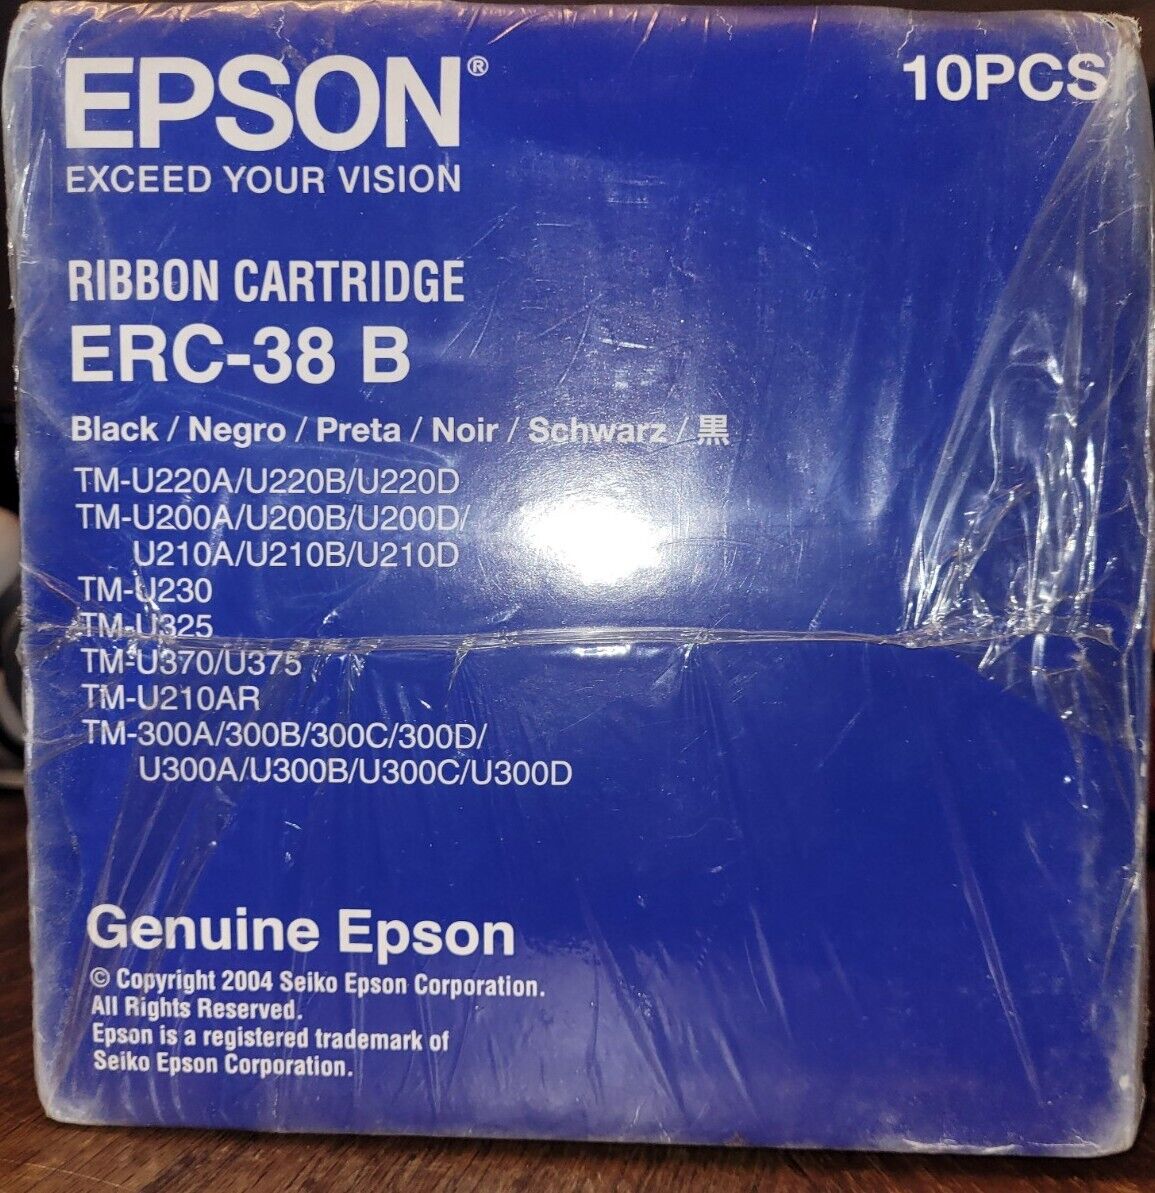 10 Genuine Epson ERC-38B Black Printer Ribbon Cartridges, NEW Sealed